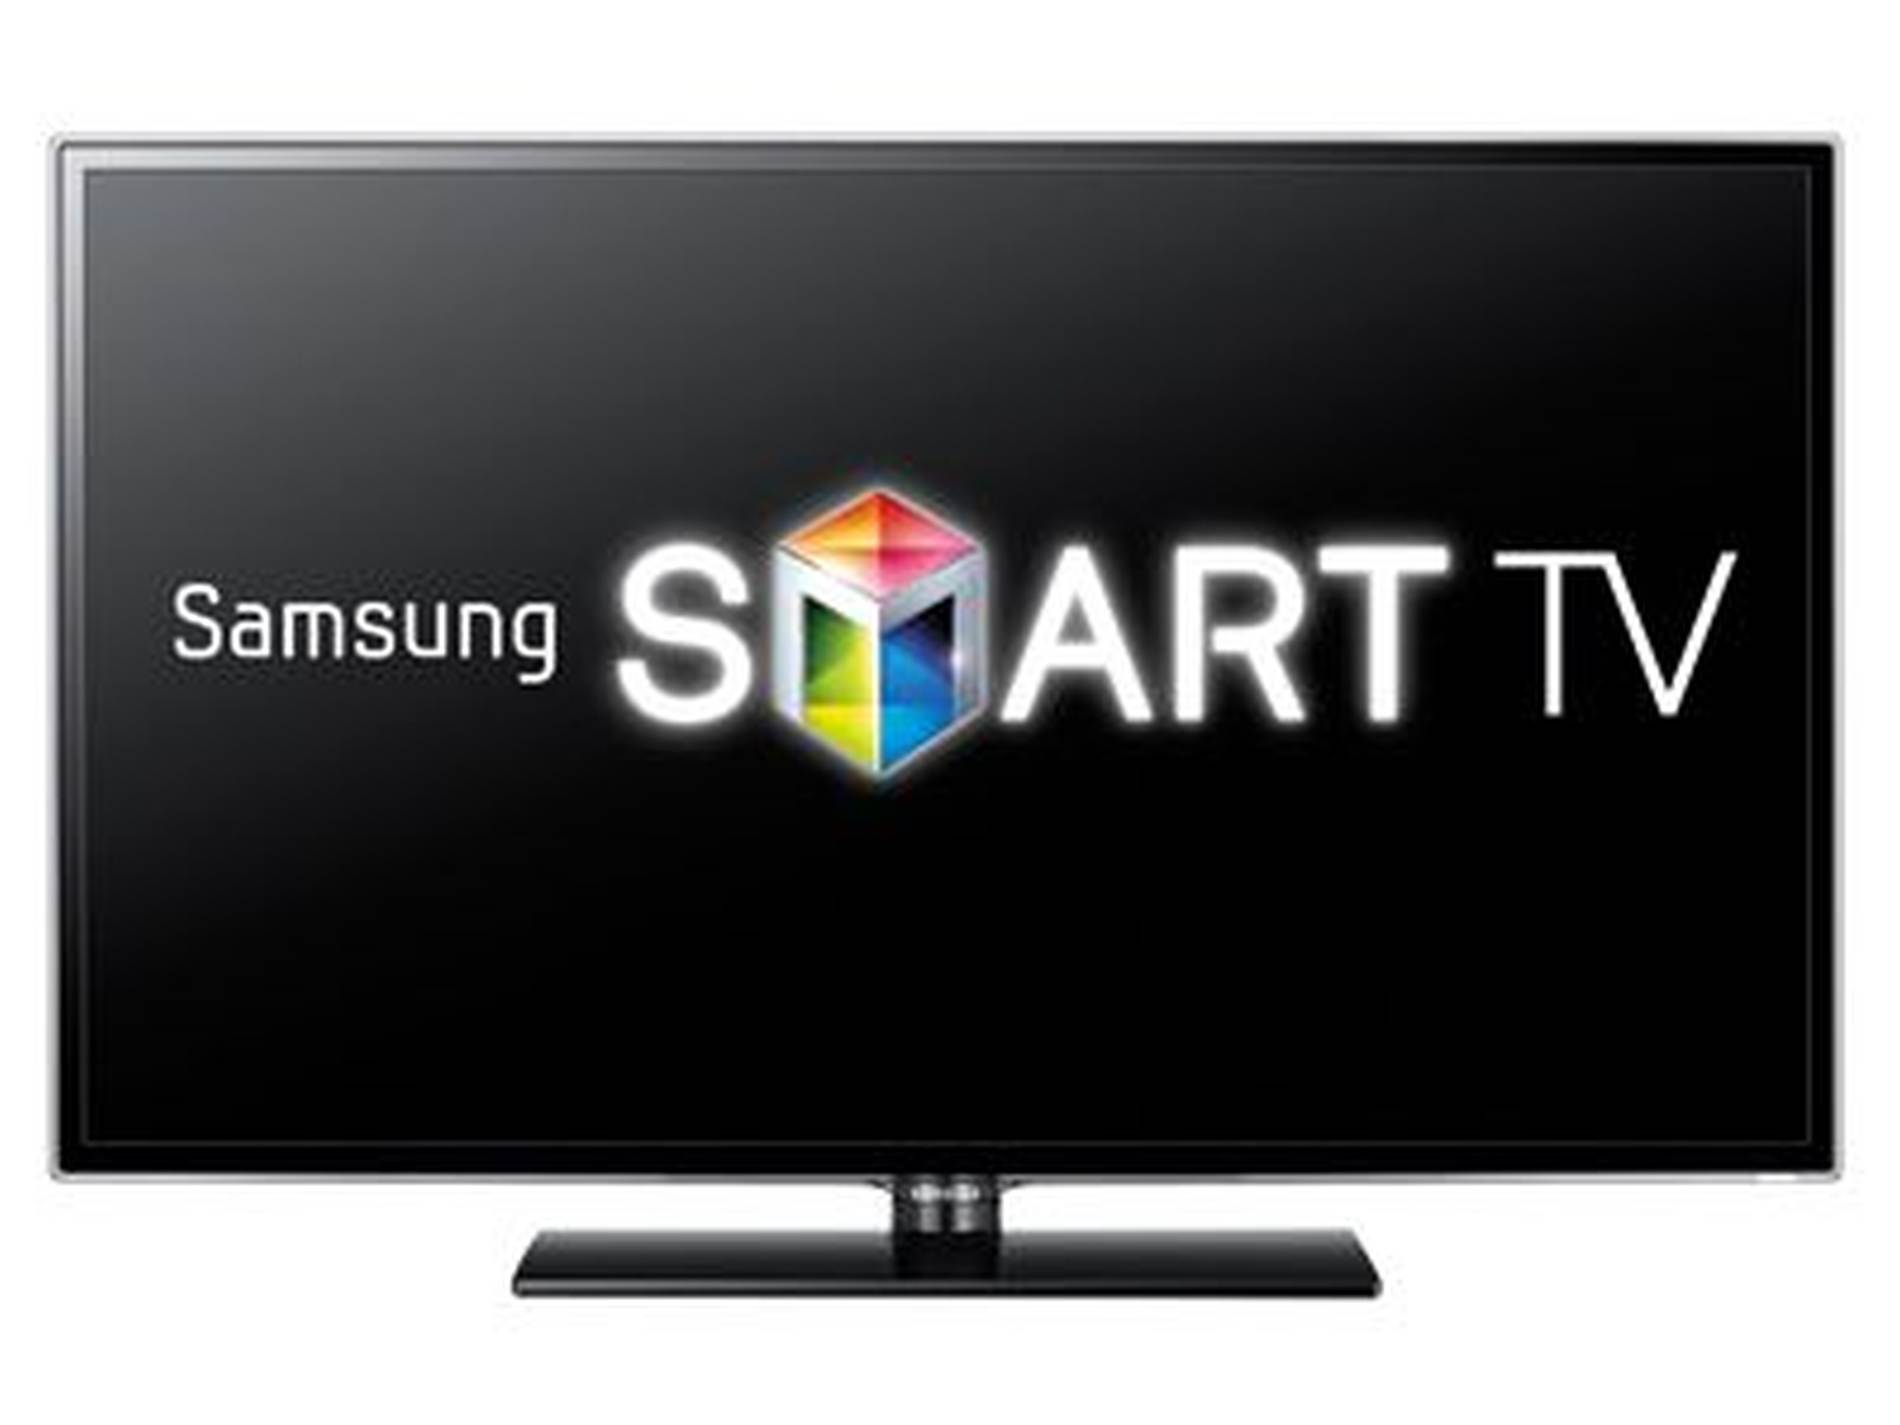 Смарт тв арк. Samsung Smart TV. Смарт телевизор. Smart TV телевизор. Телевизор самсунг смарт.